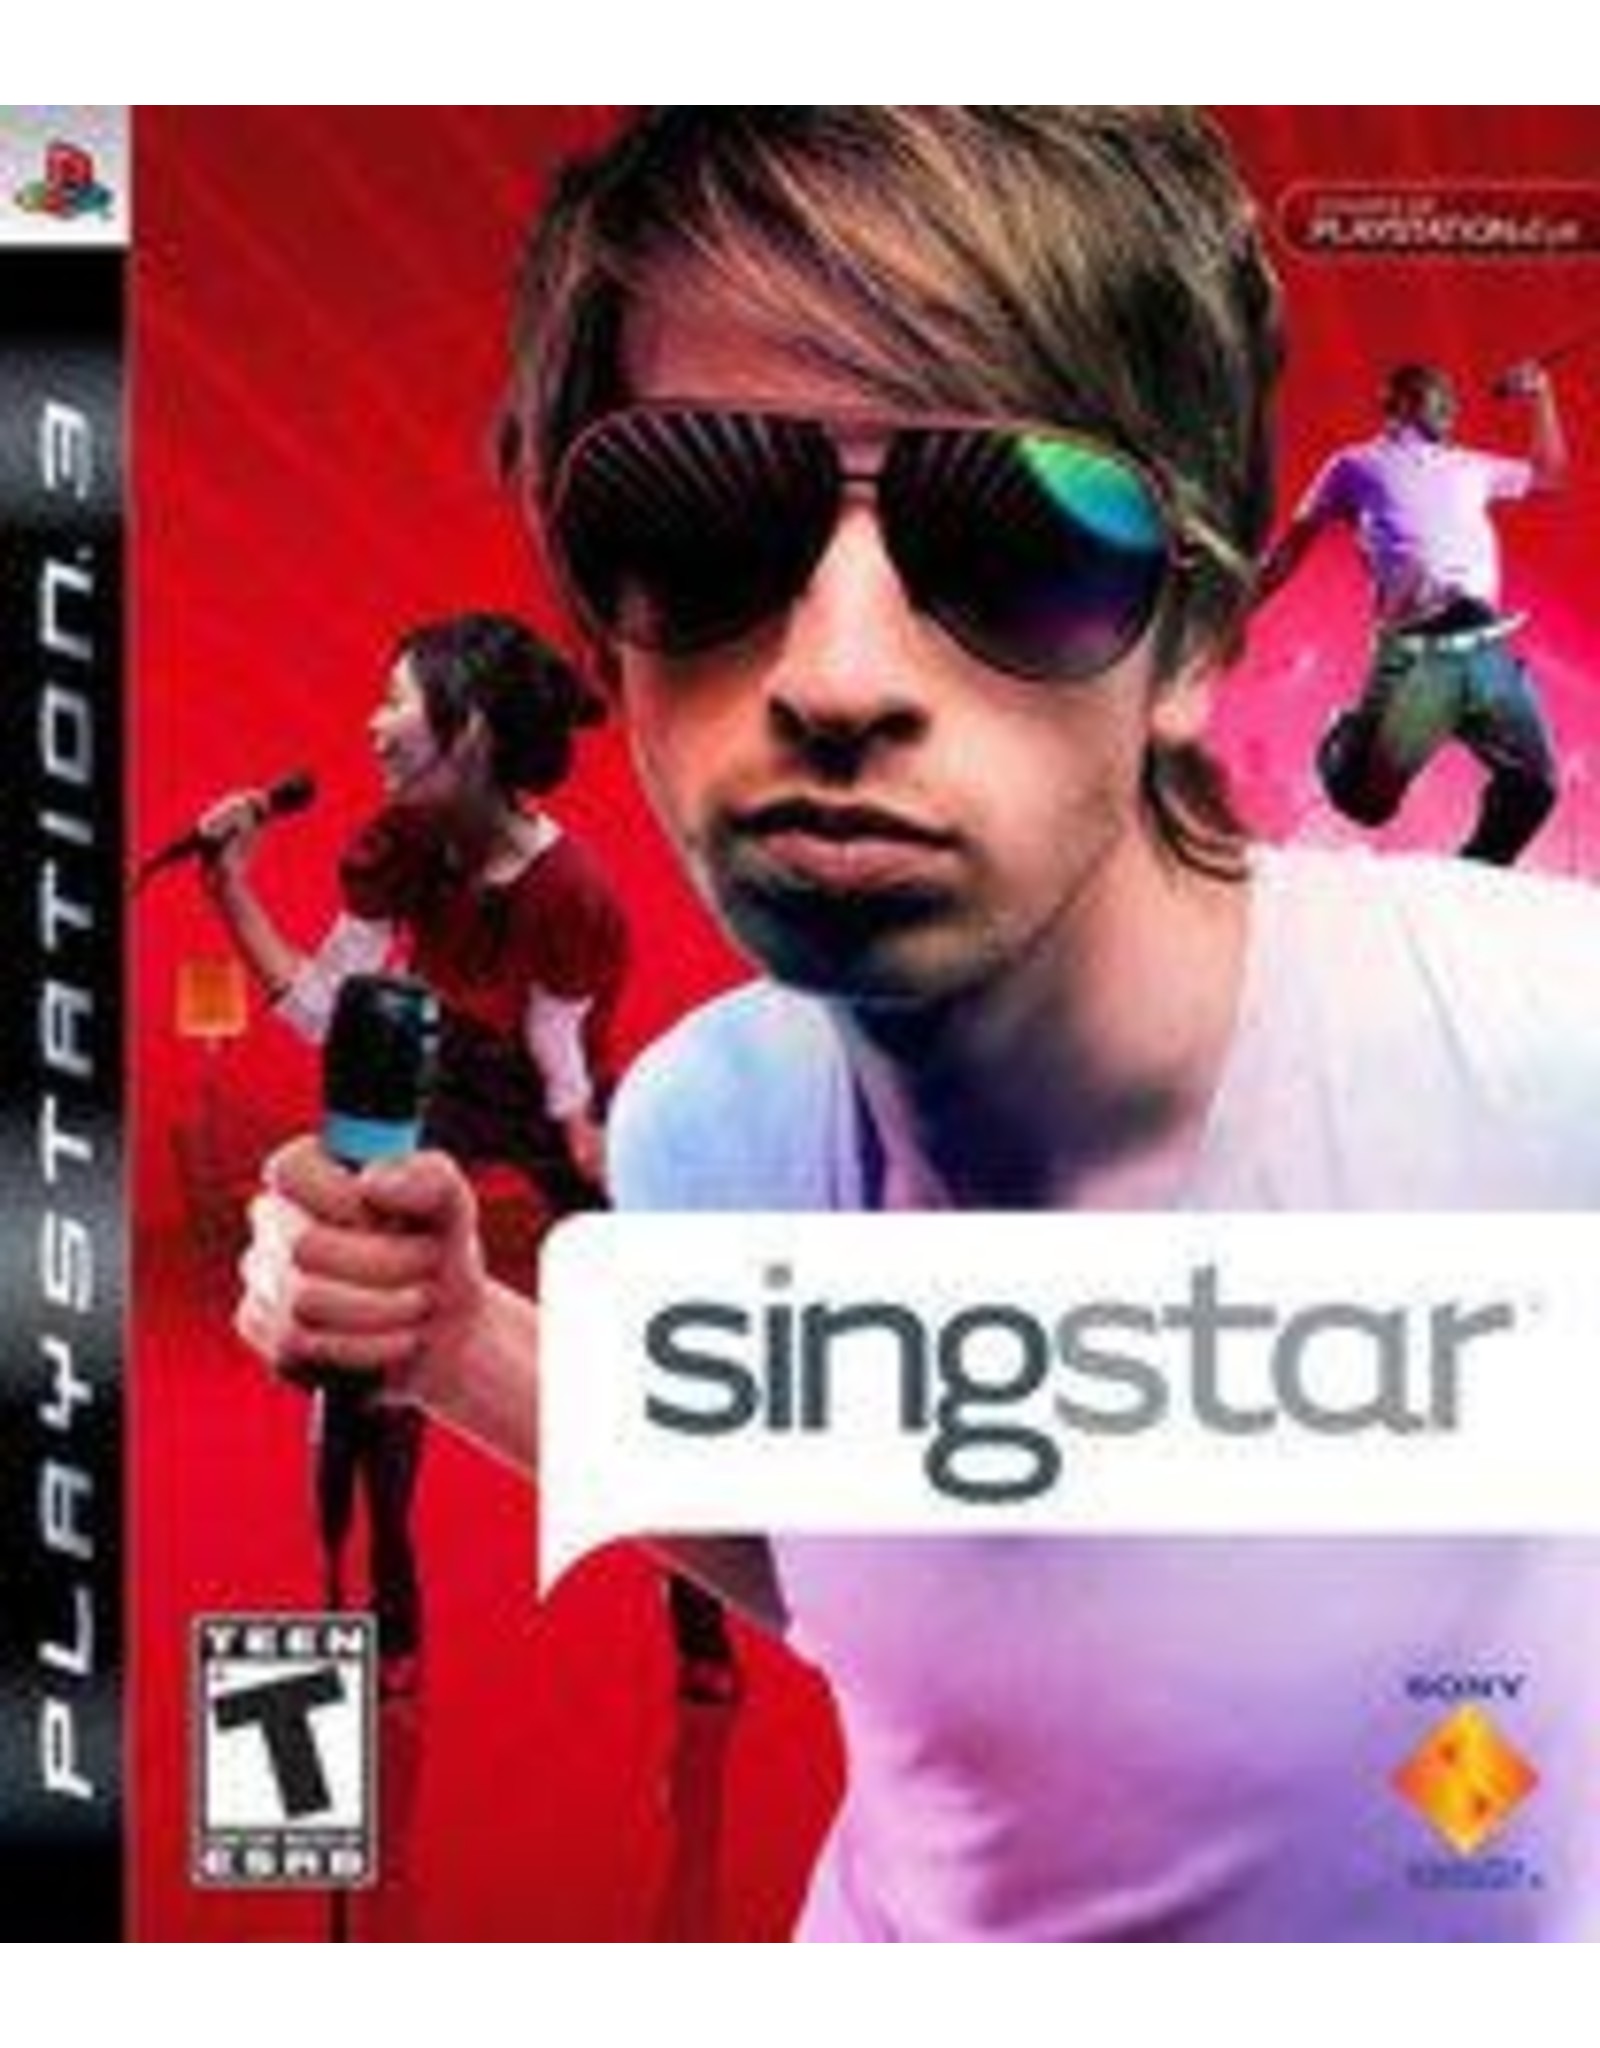 Playstation 3 SingStar (Game Only, CiB)